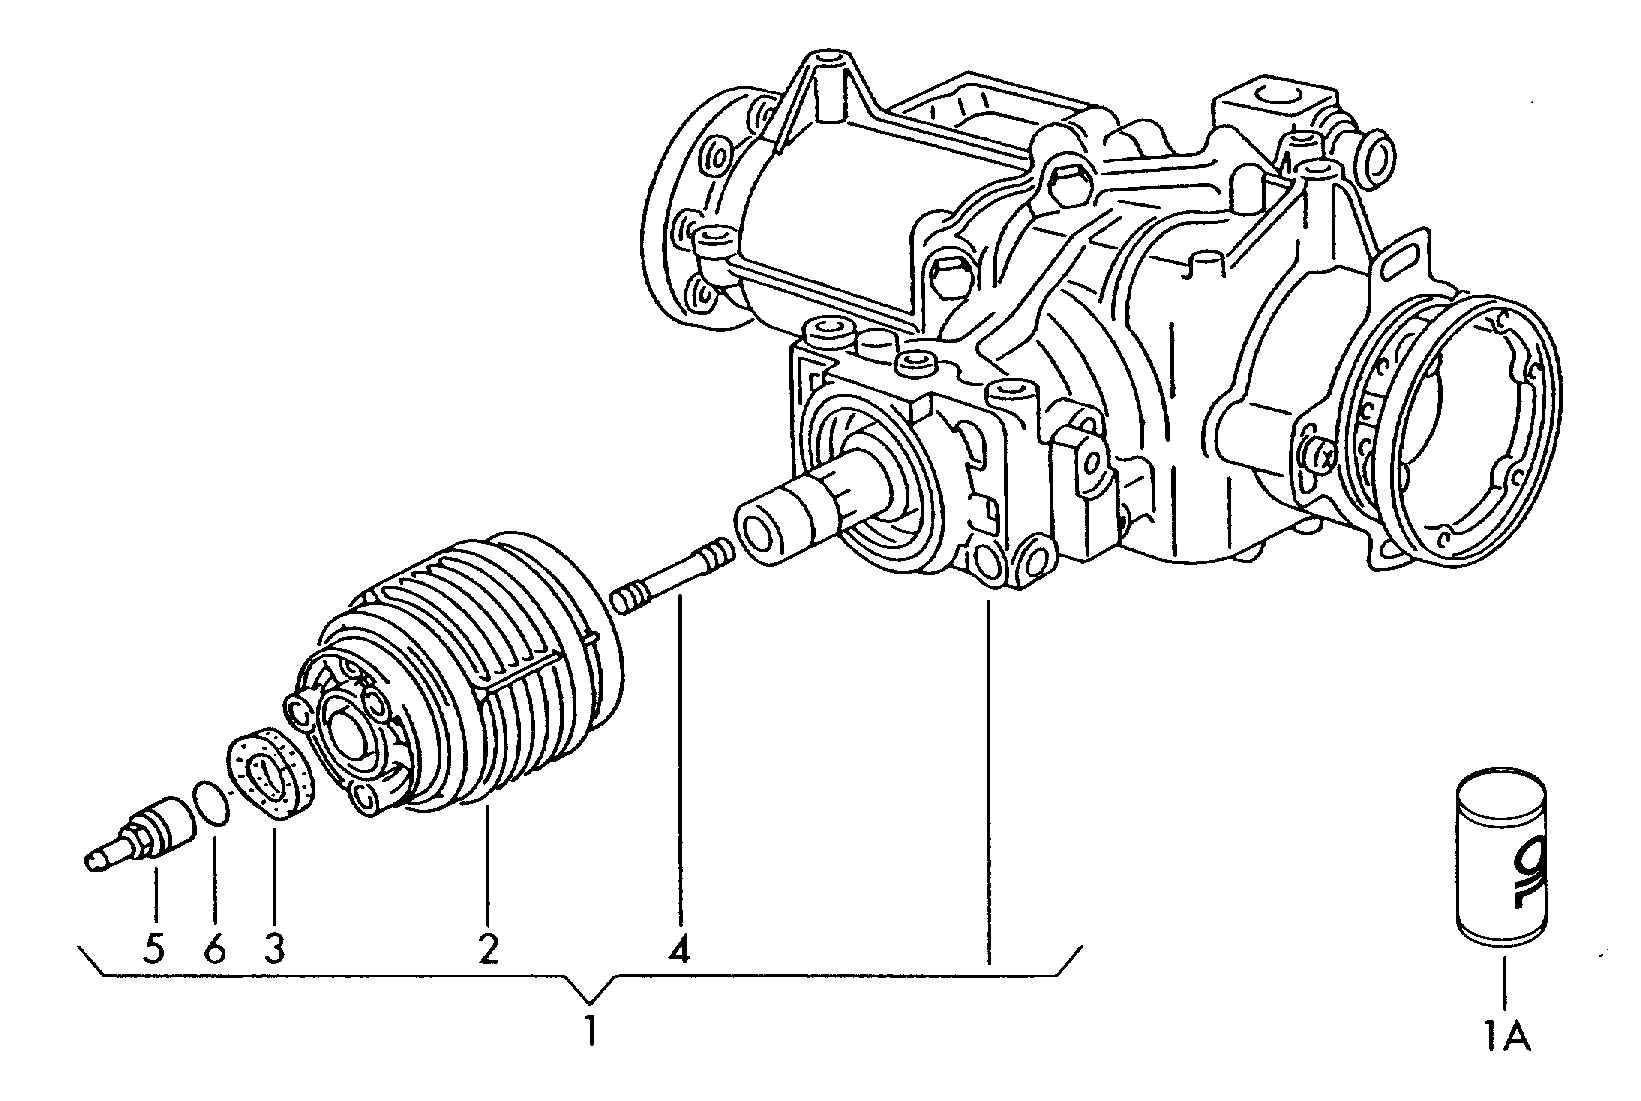 AchsantriebVisco-Kupplung hinten - Transporter syncro - trsy